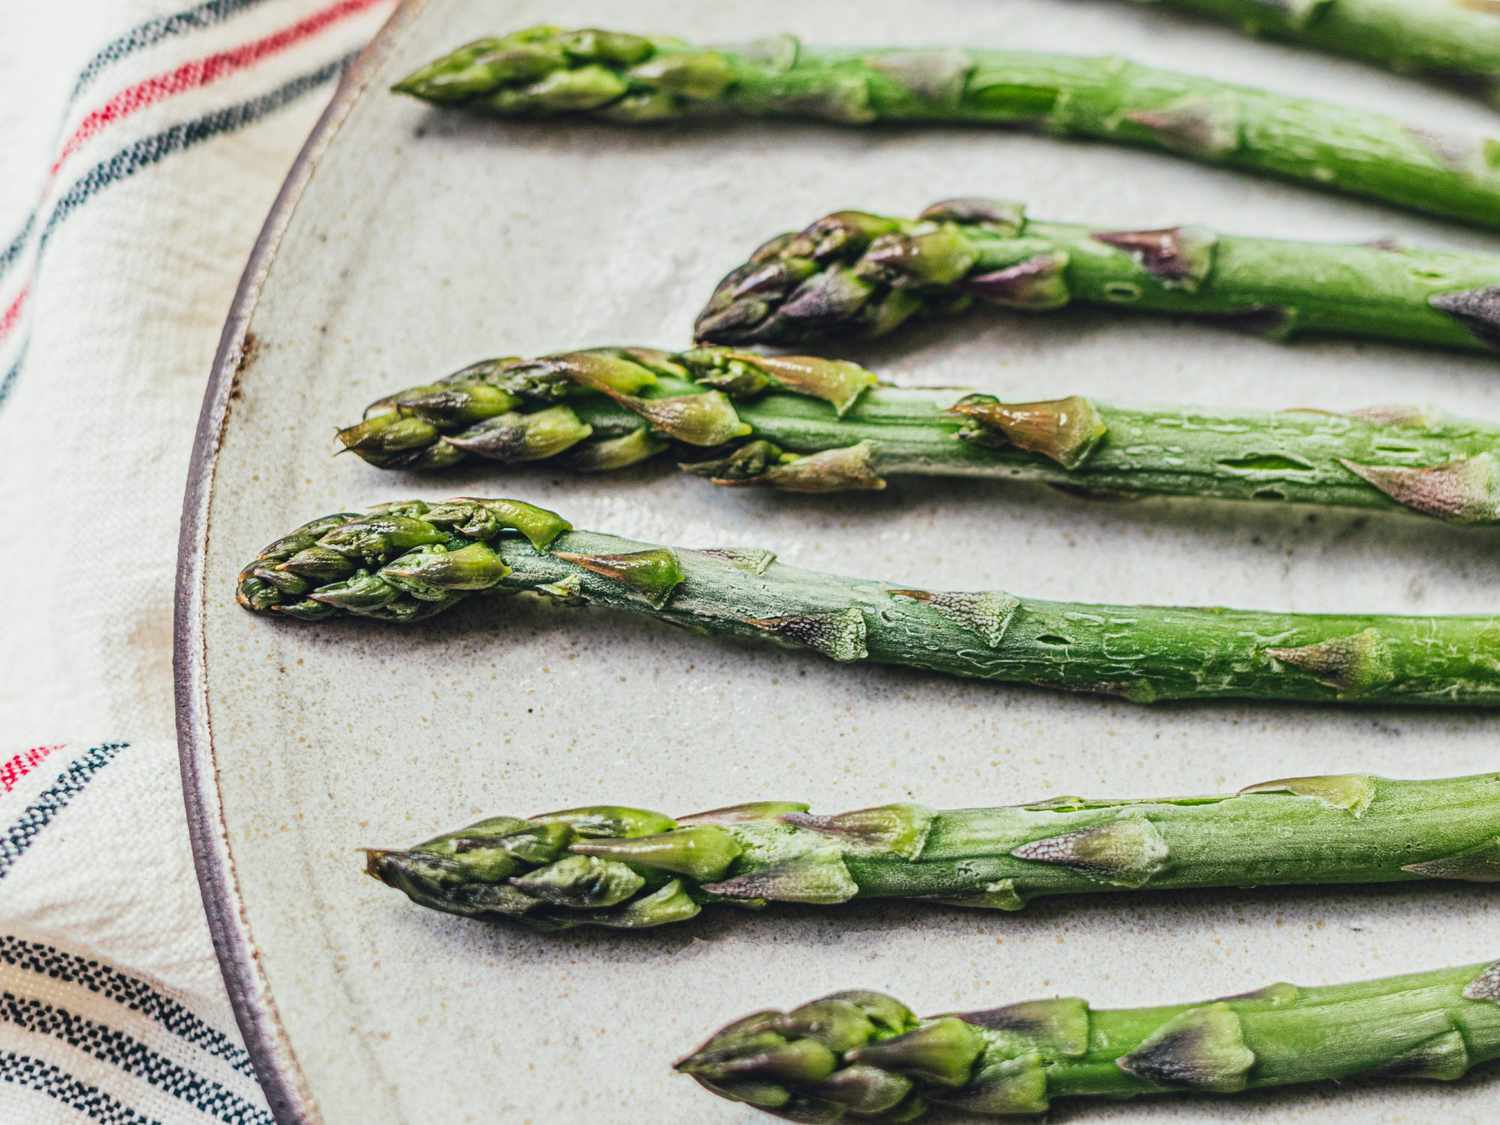 How to freeze asparagus